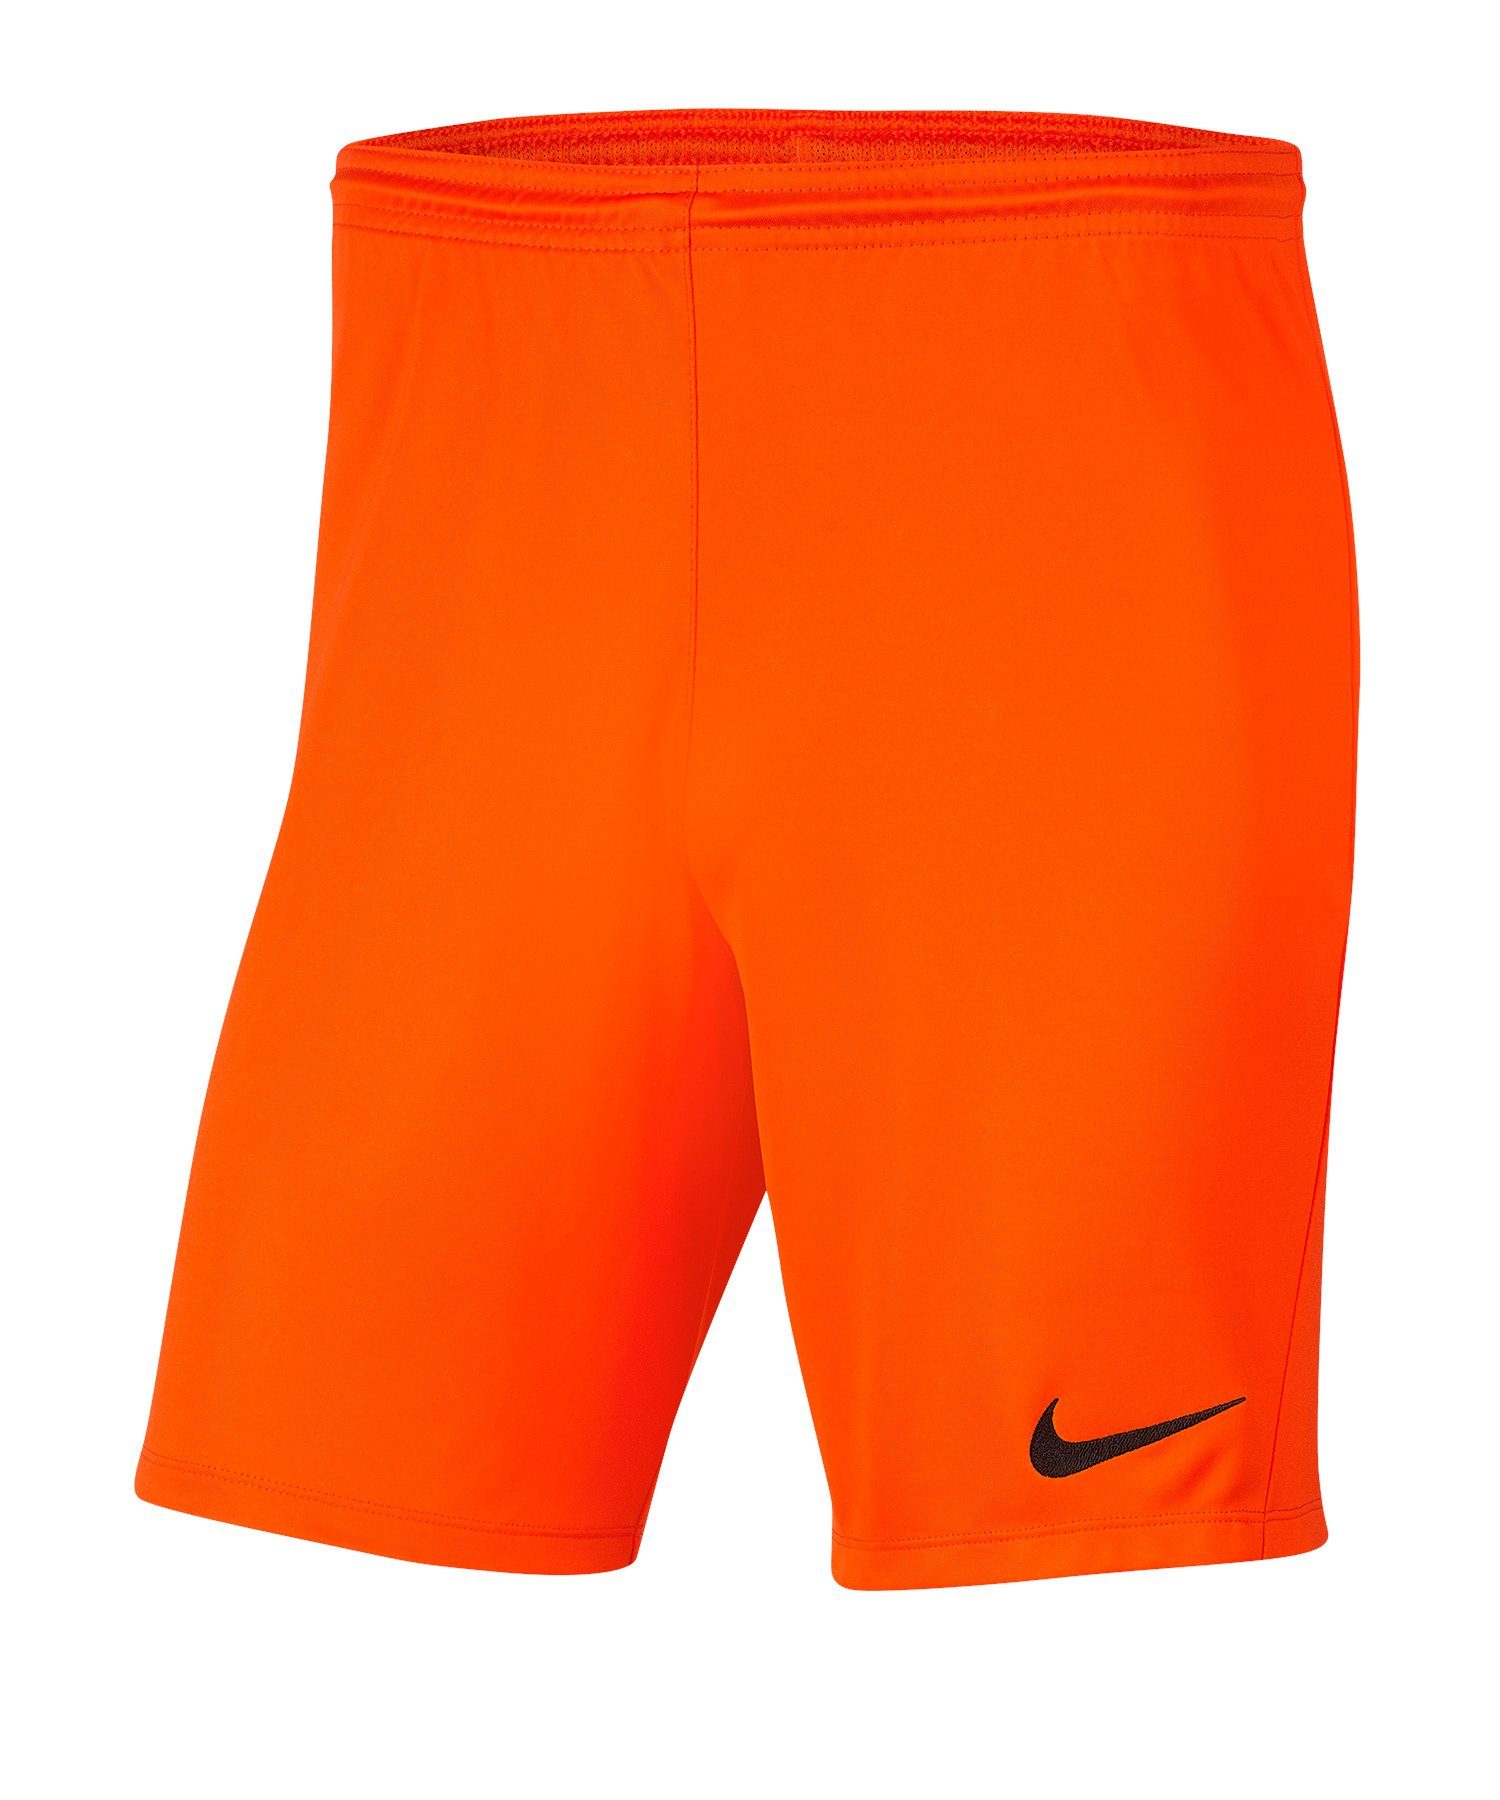 Nike Sporthose Park III Short orange | Turnhosen